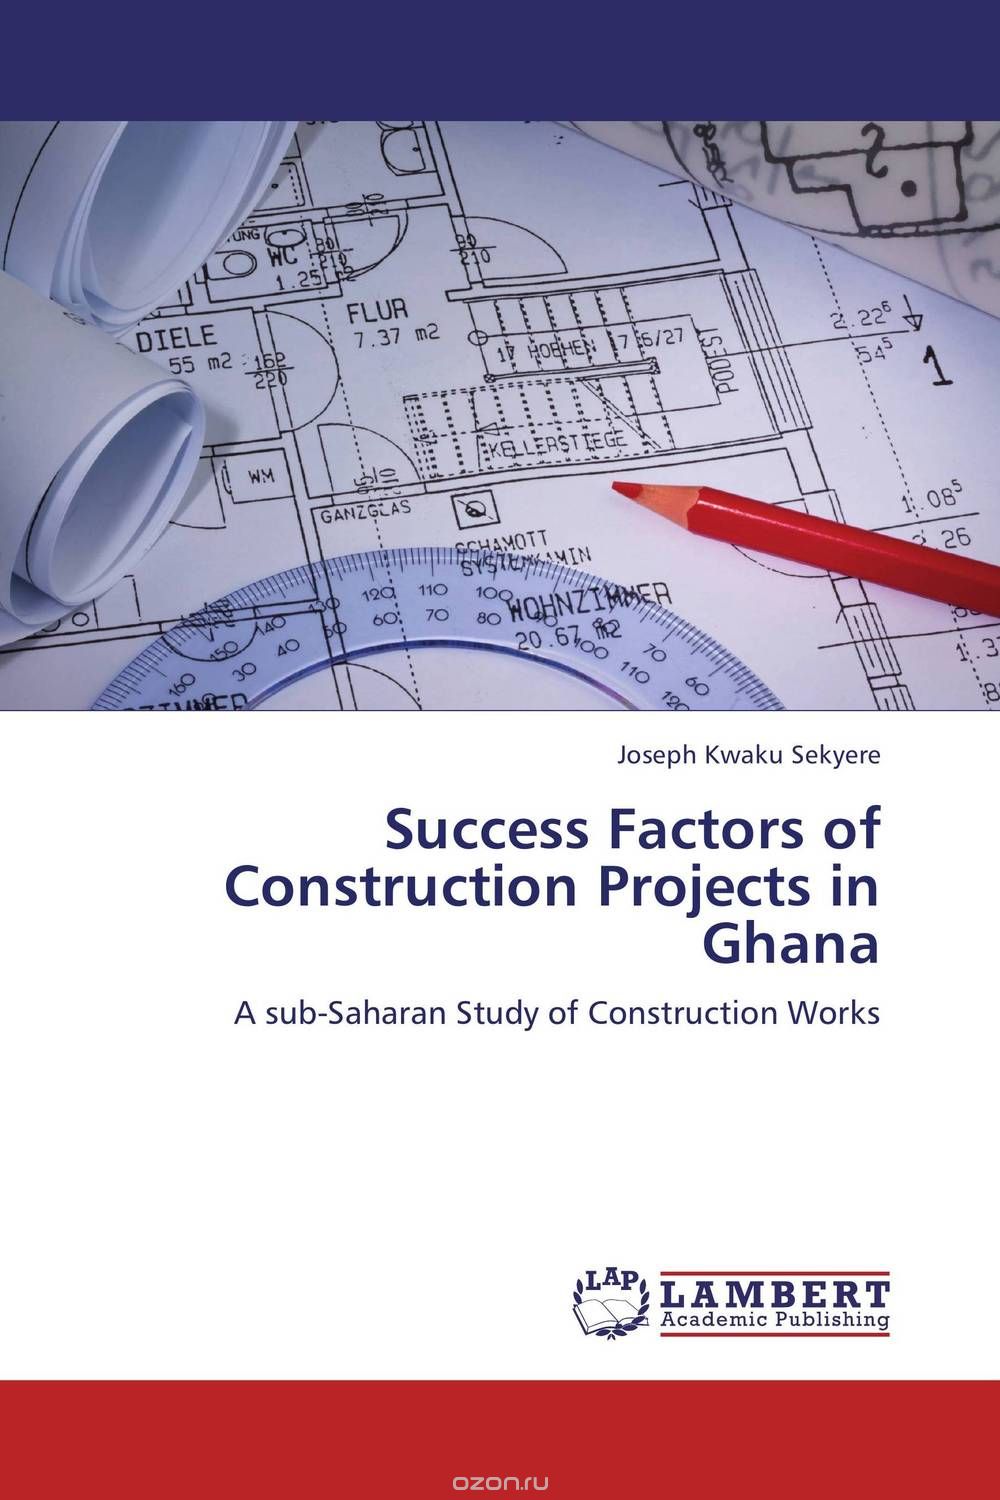 Скачать книгу "Success Factors of Construction Projects in Ghana"